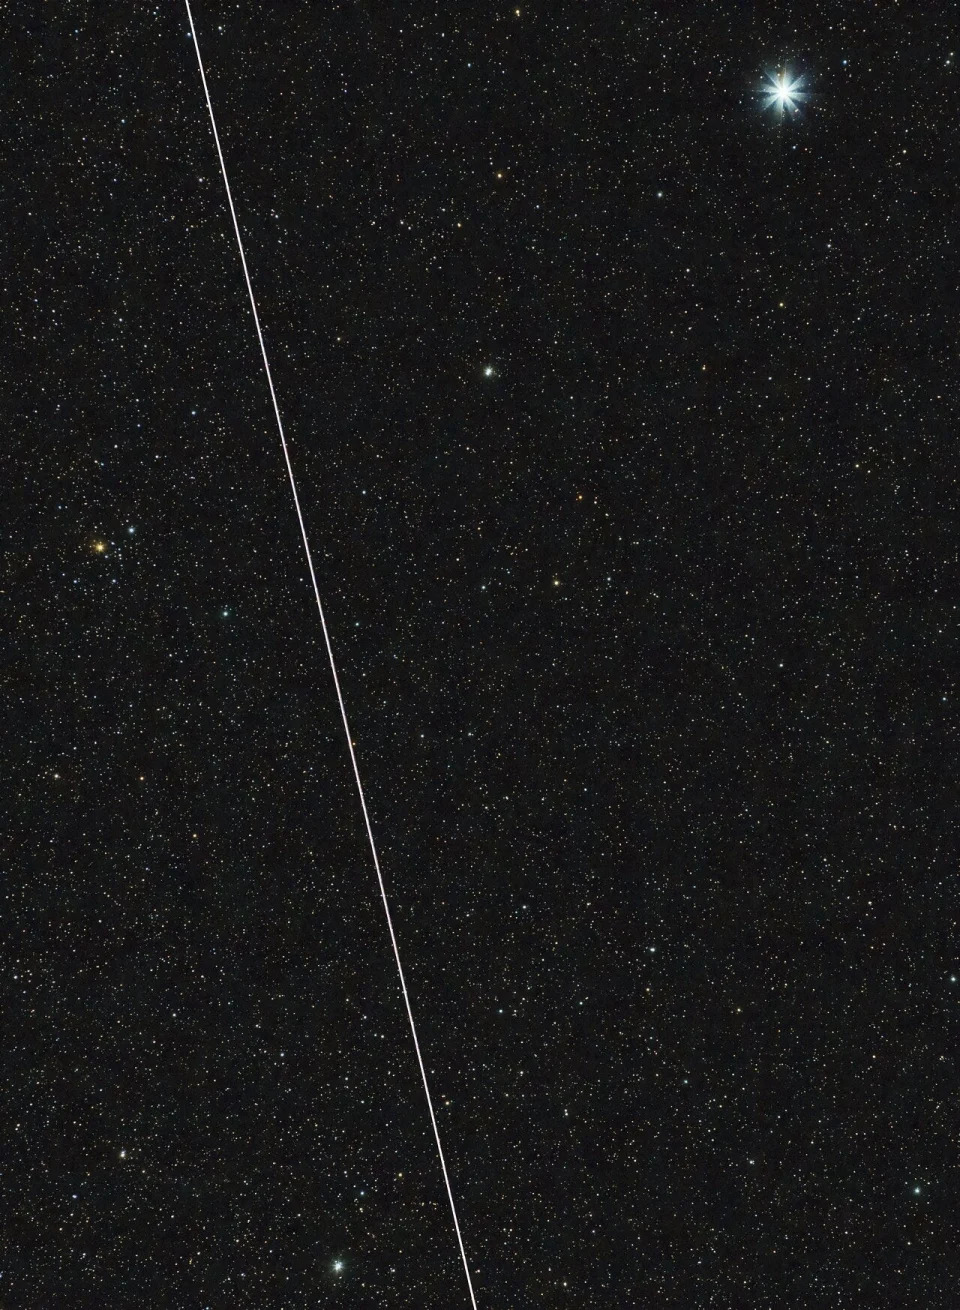 Trail of BlueWalker 3 crossing the night sky, taken from a backyard in Tucson, Arizona, on 20 November 2022.